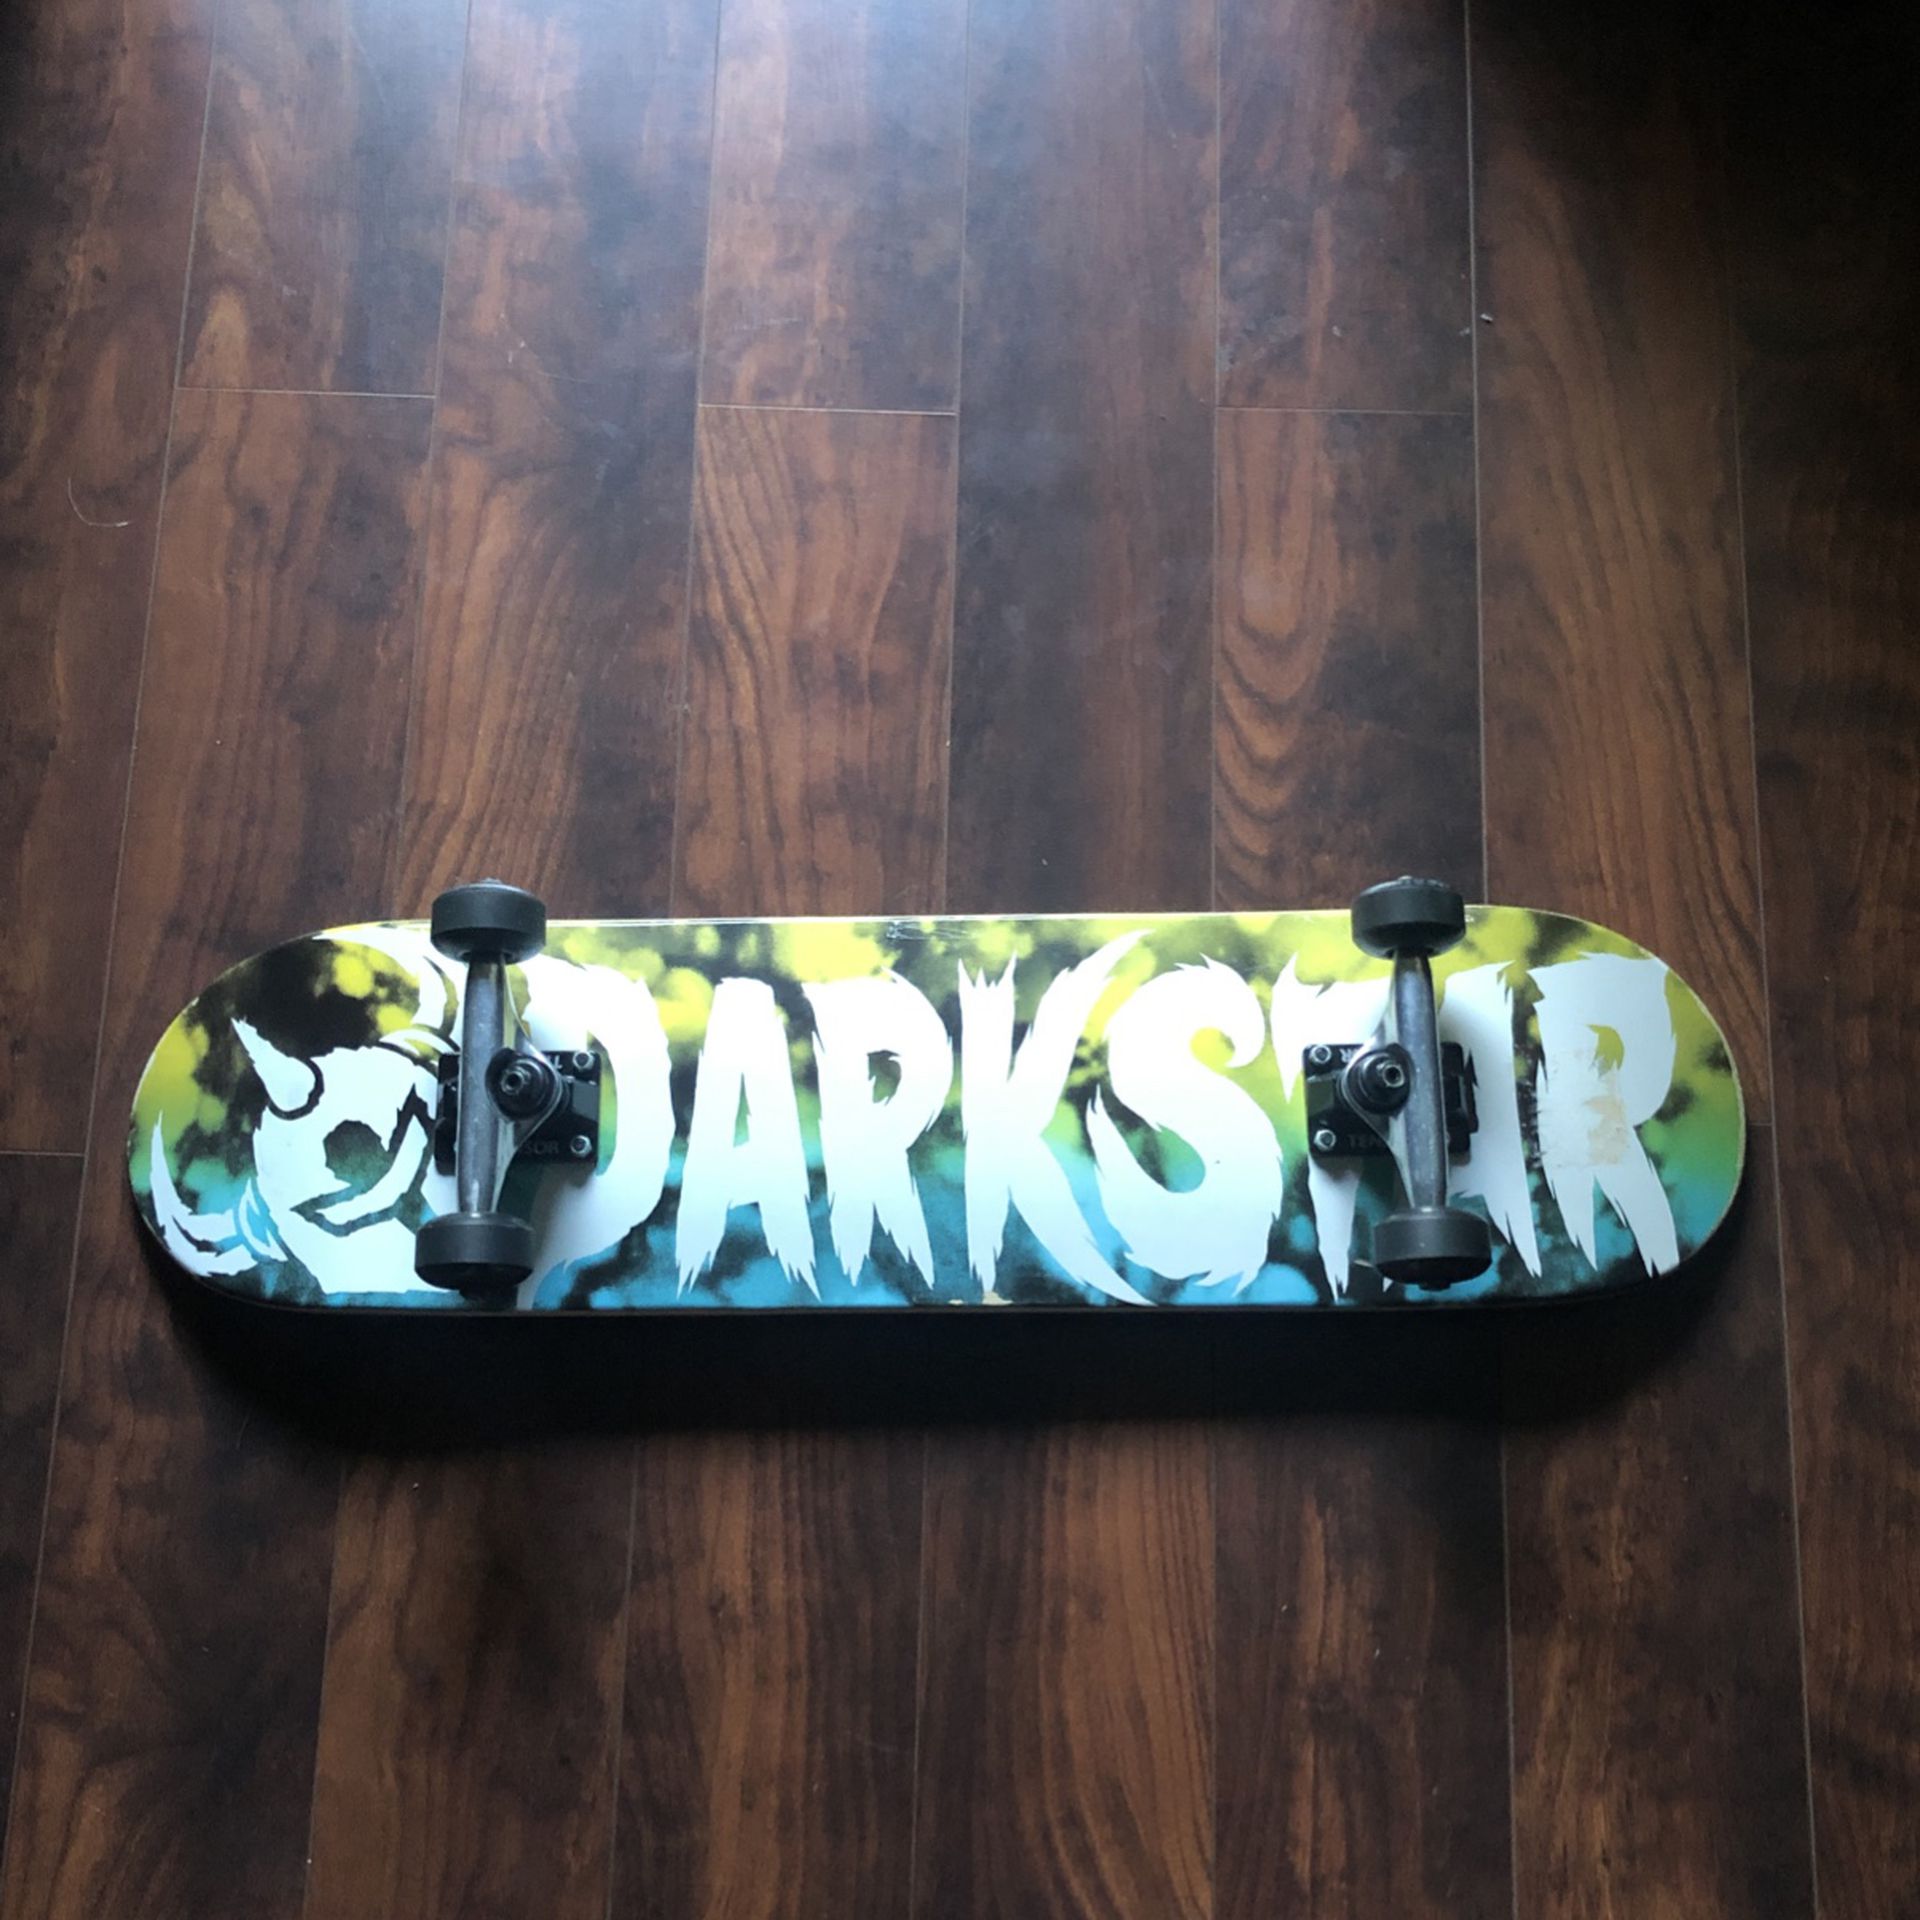 Brand new skateboard